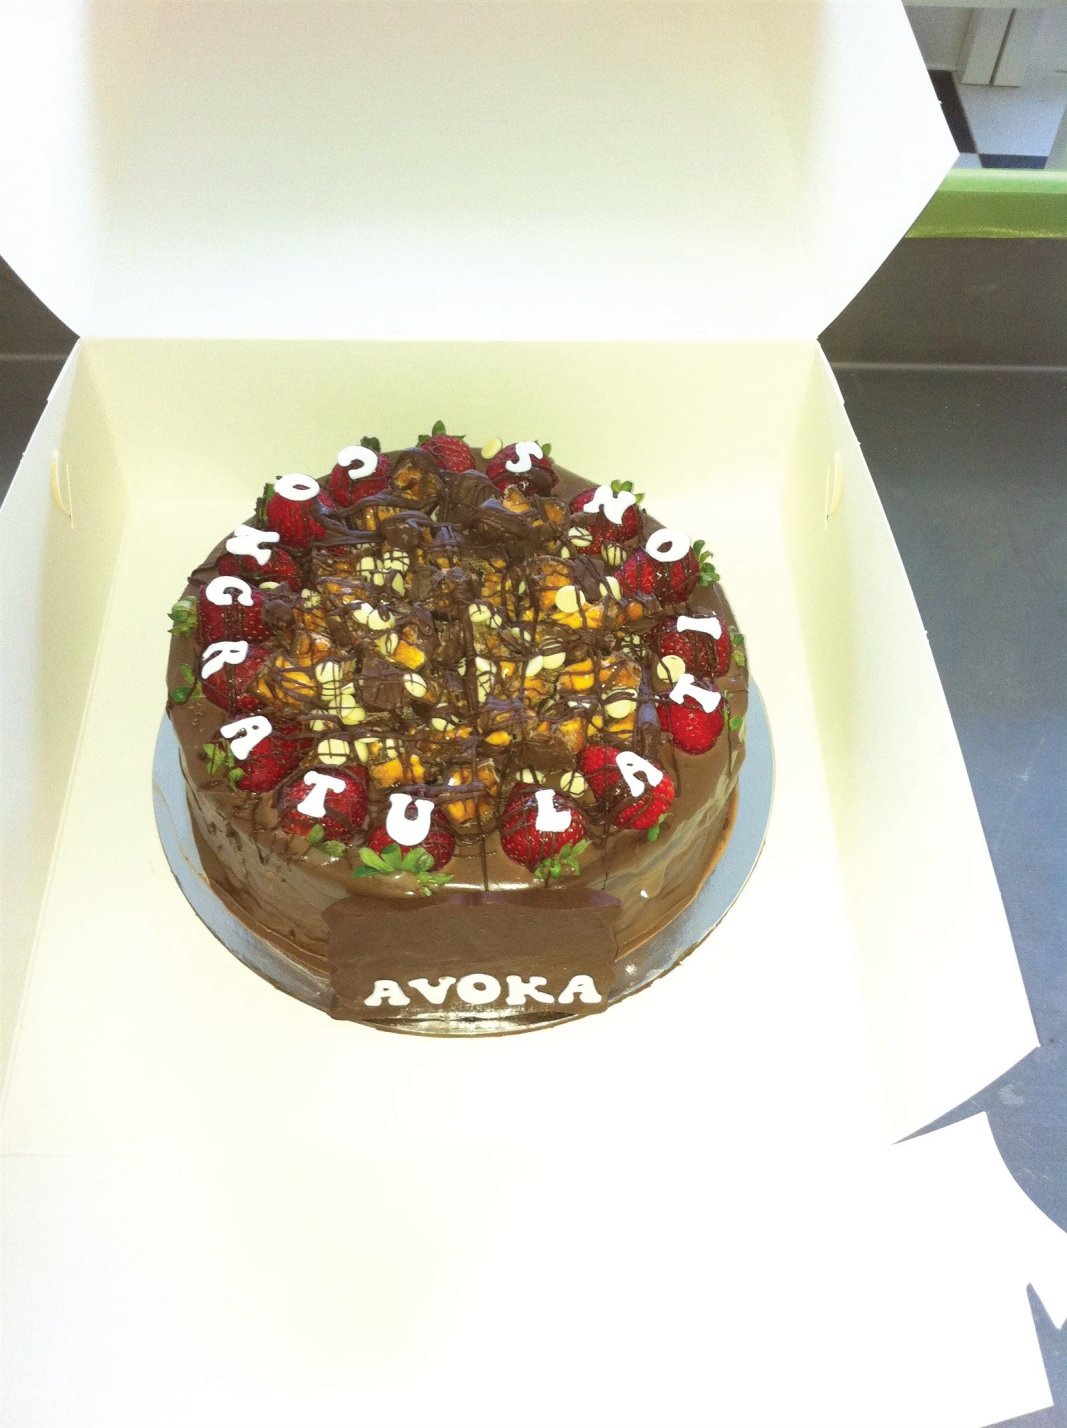 www.peekaboopartycakes.com
corporate celebration cakes 
Avoka manly